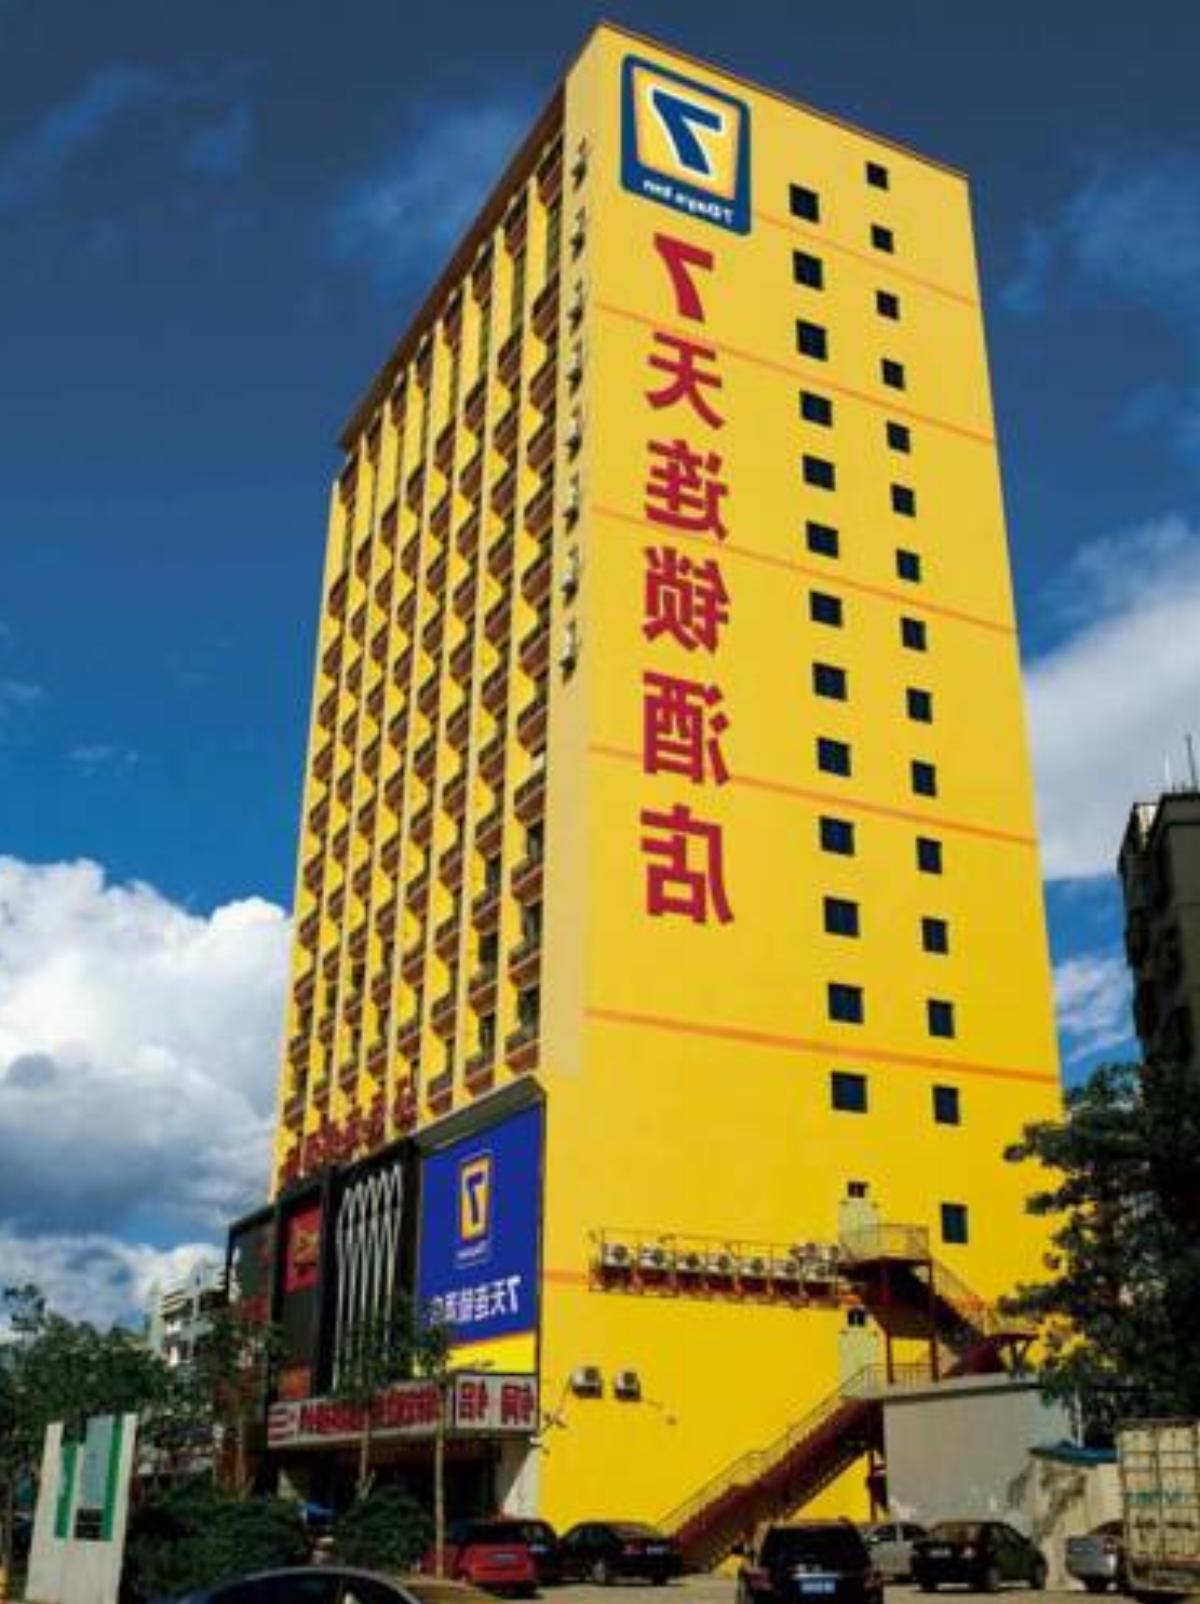 7Days Inn Kaifeng Songcheng Road Jingxi Hotel Kaifeng China